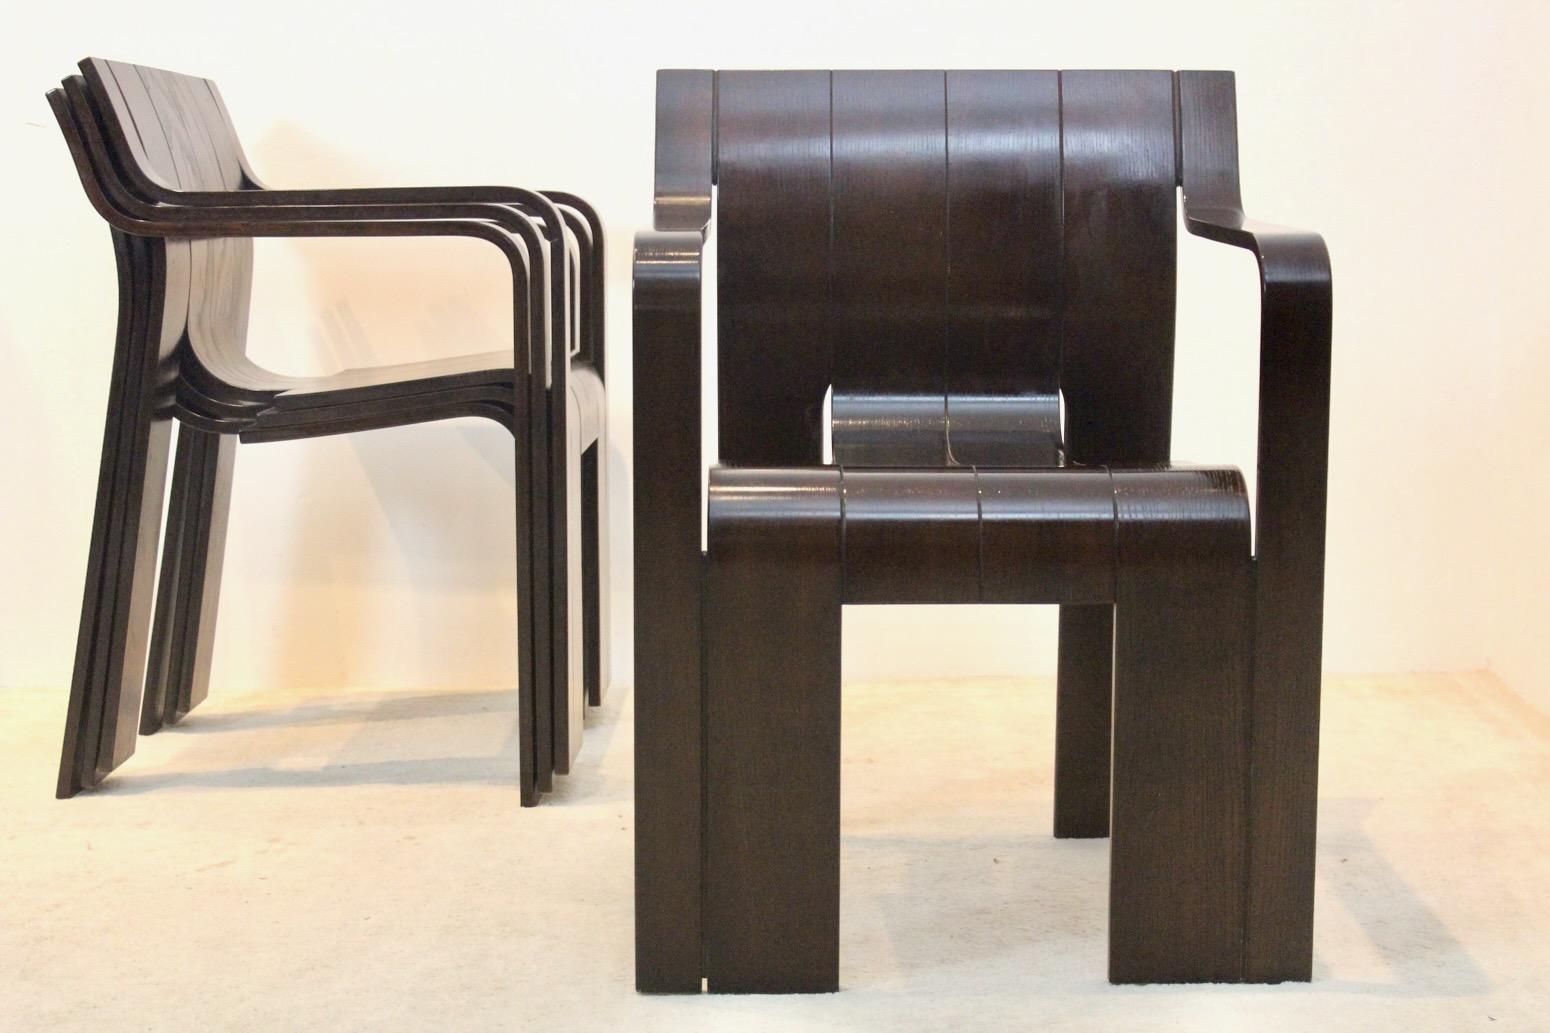 ‘Strip’ Chairs with Armrests in Dark-Brown Ashwood by Gijs Bakker for Castelijn For Sale 7